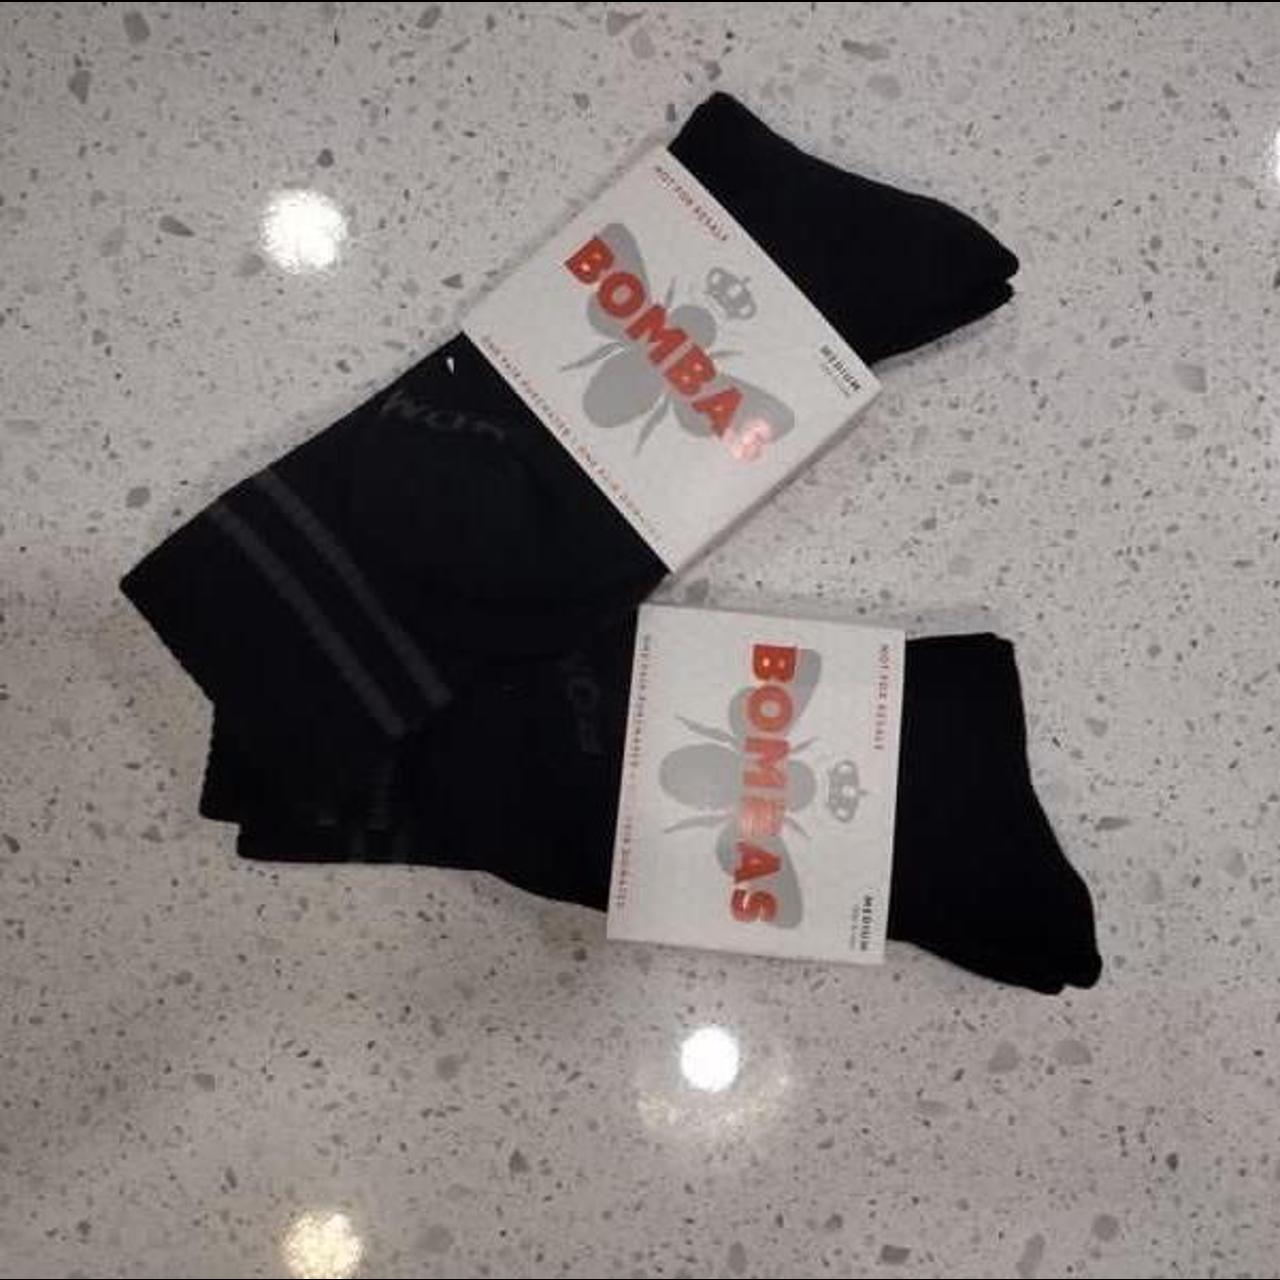 Bombas Men's Black Socks (4)